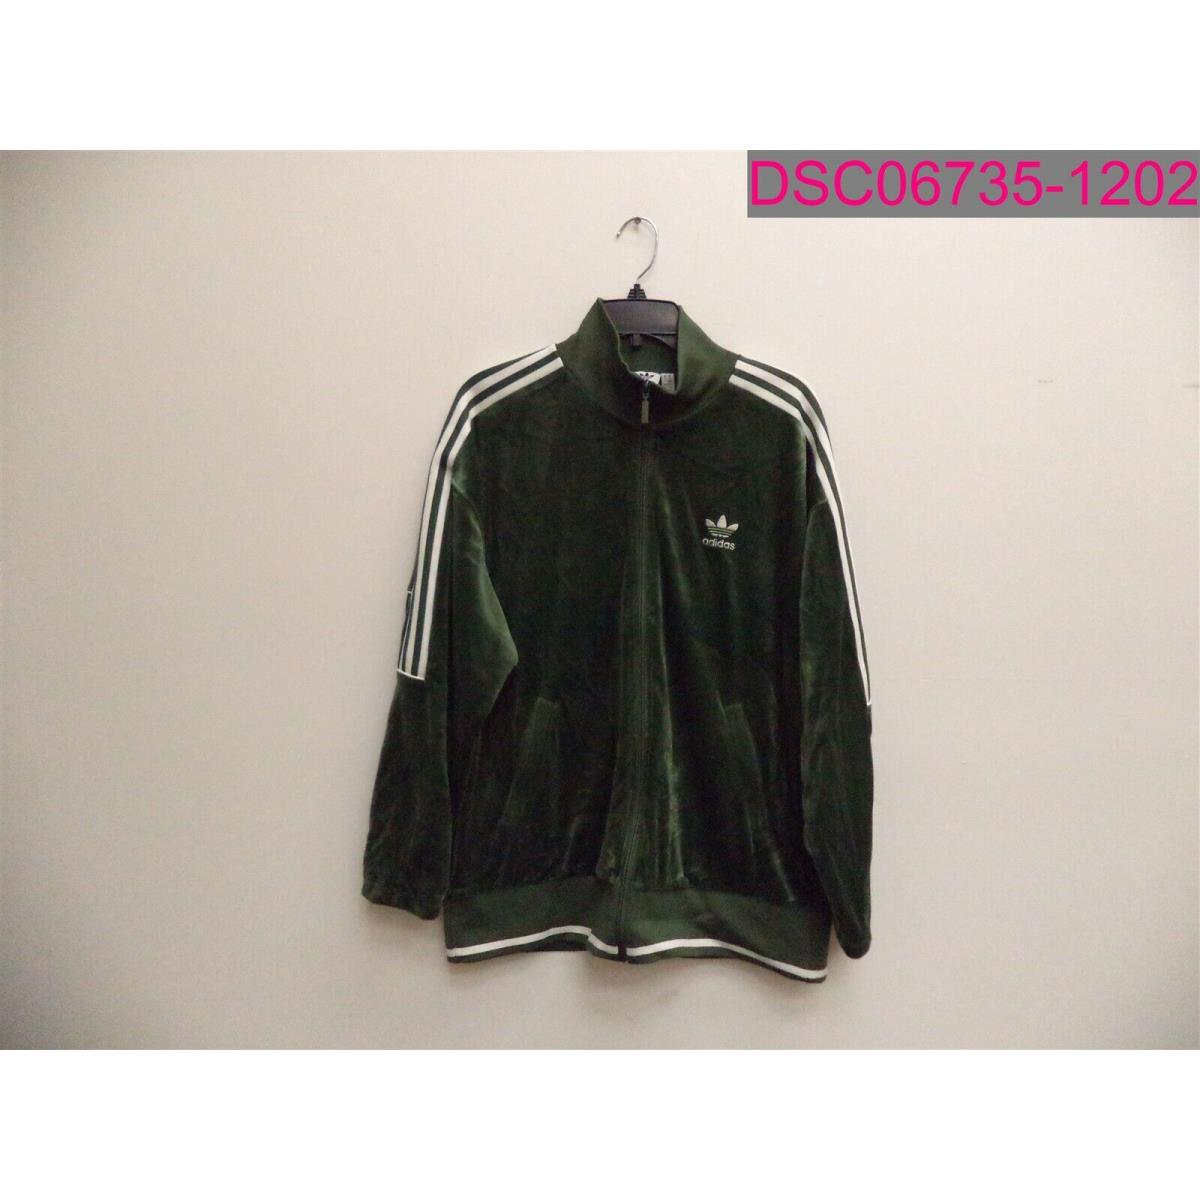 Zoom in aesthetic browse Adidas Women`s Green Velvet Track Jacket Top Medium Full Zip DH4653 |  692740447254 - Adidas clothing - Green | SporTipTop